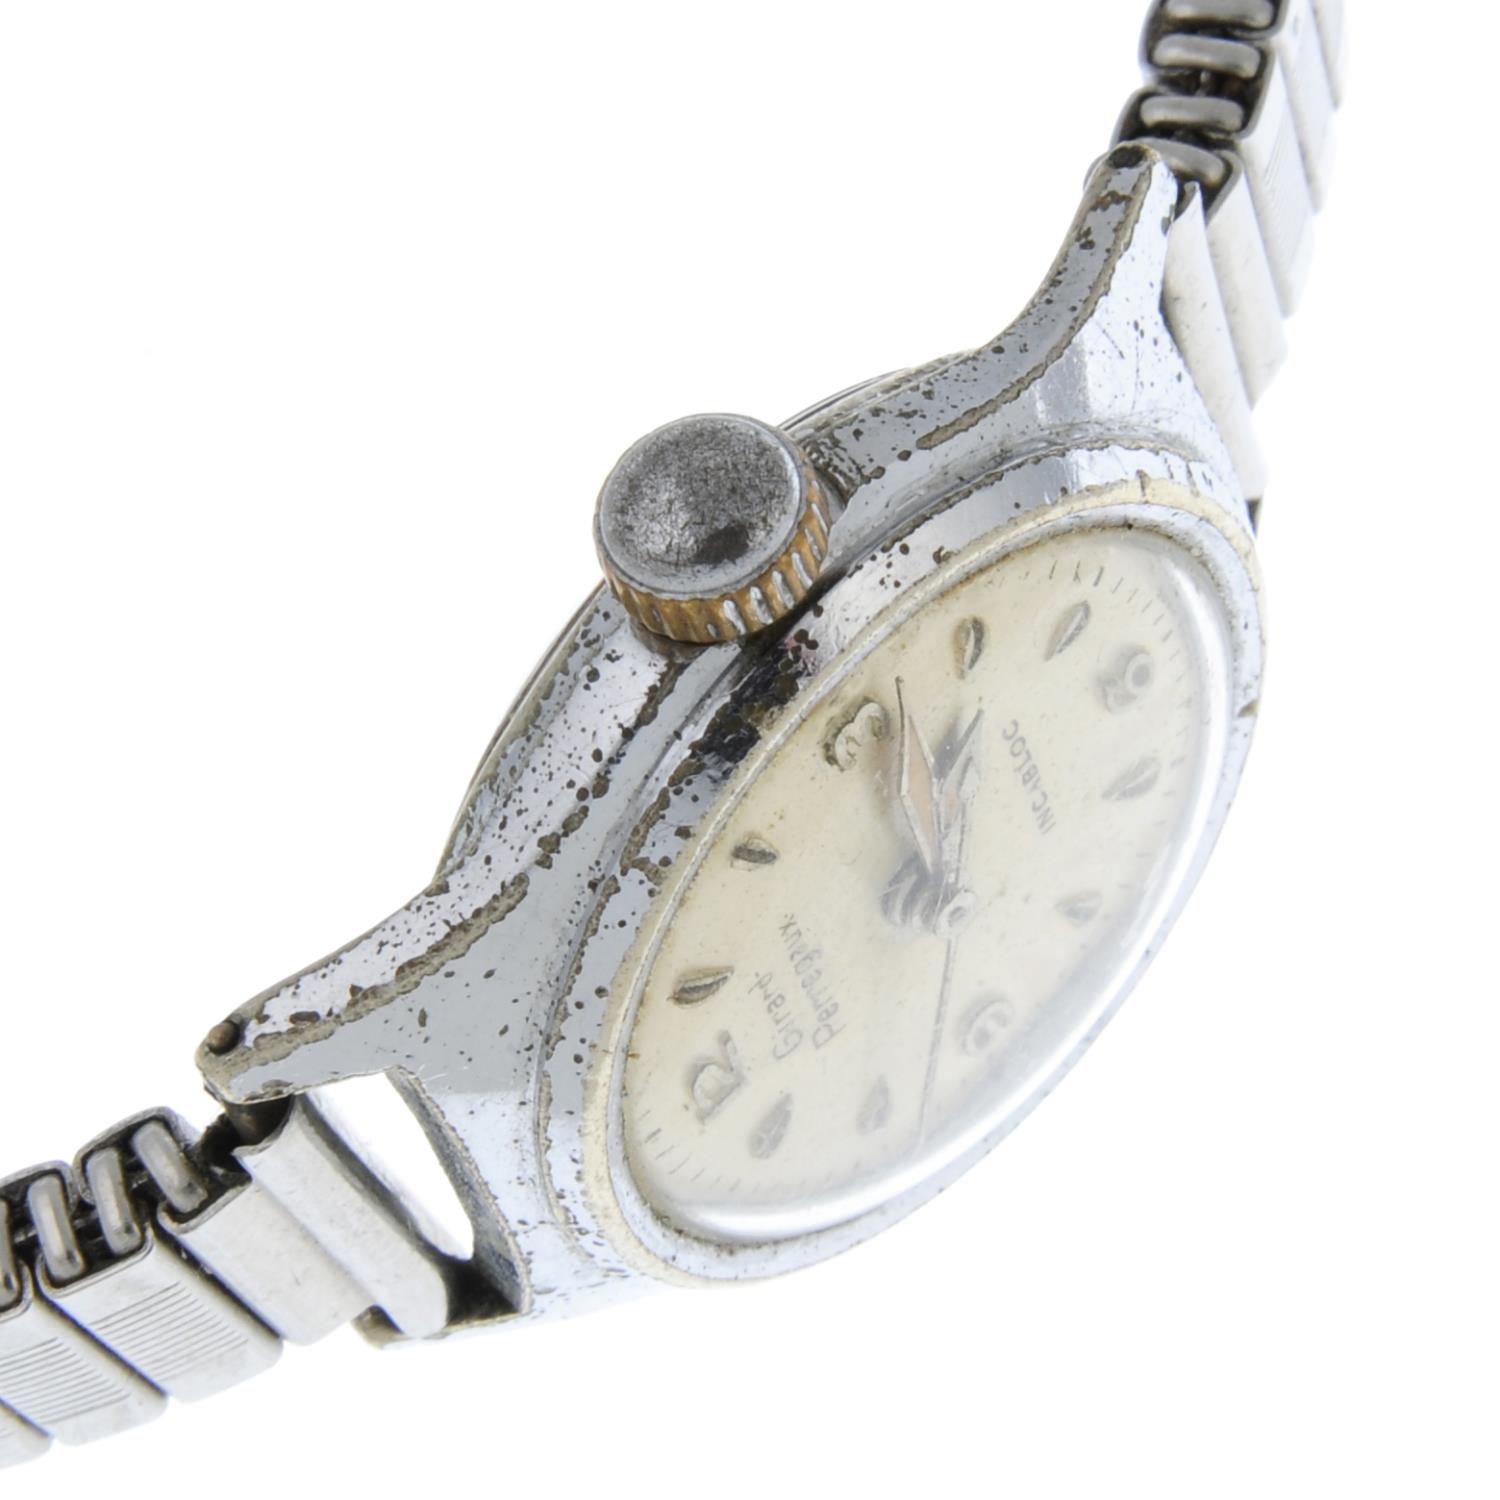 GIRARD-PERREGAUX - a gentleman's wrist watch. - Image 6 of 7